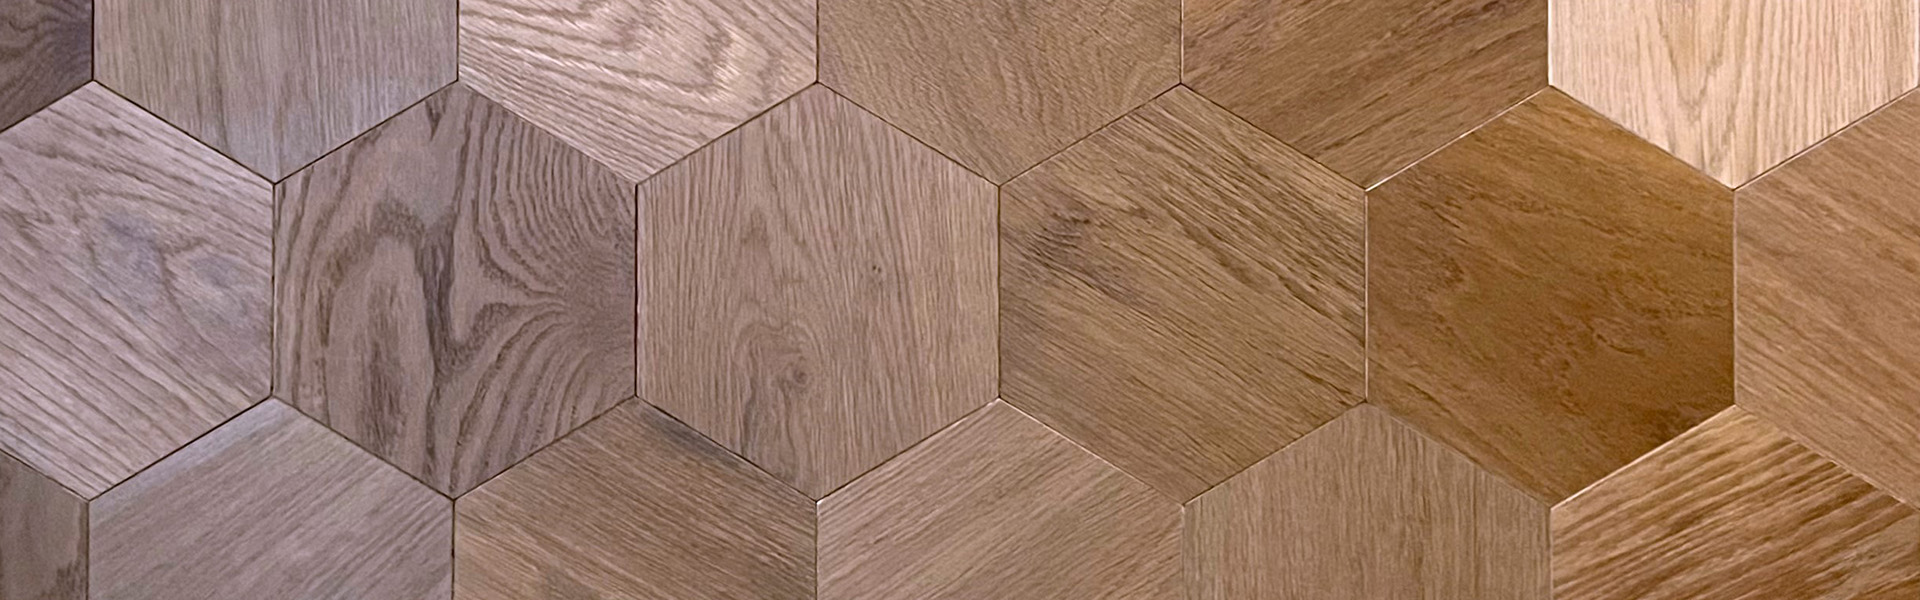 infinite range by timber floor collective